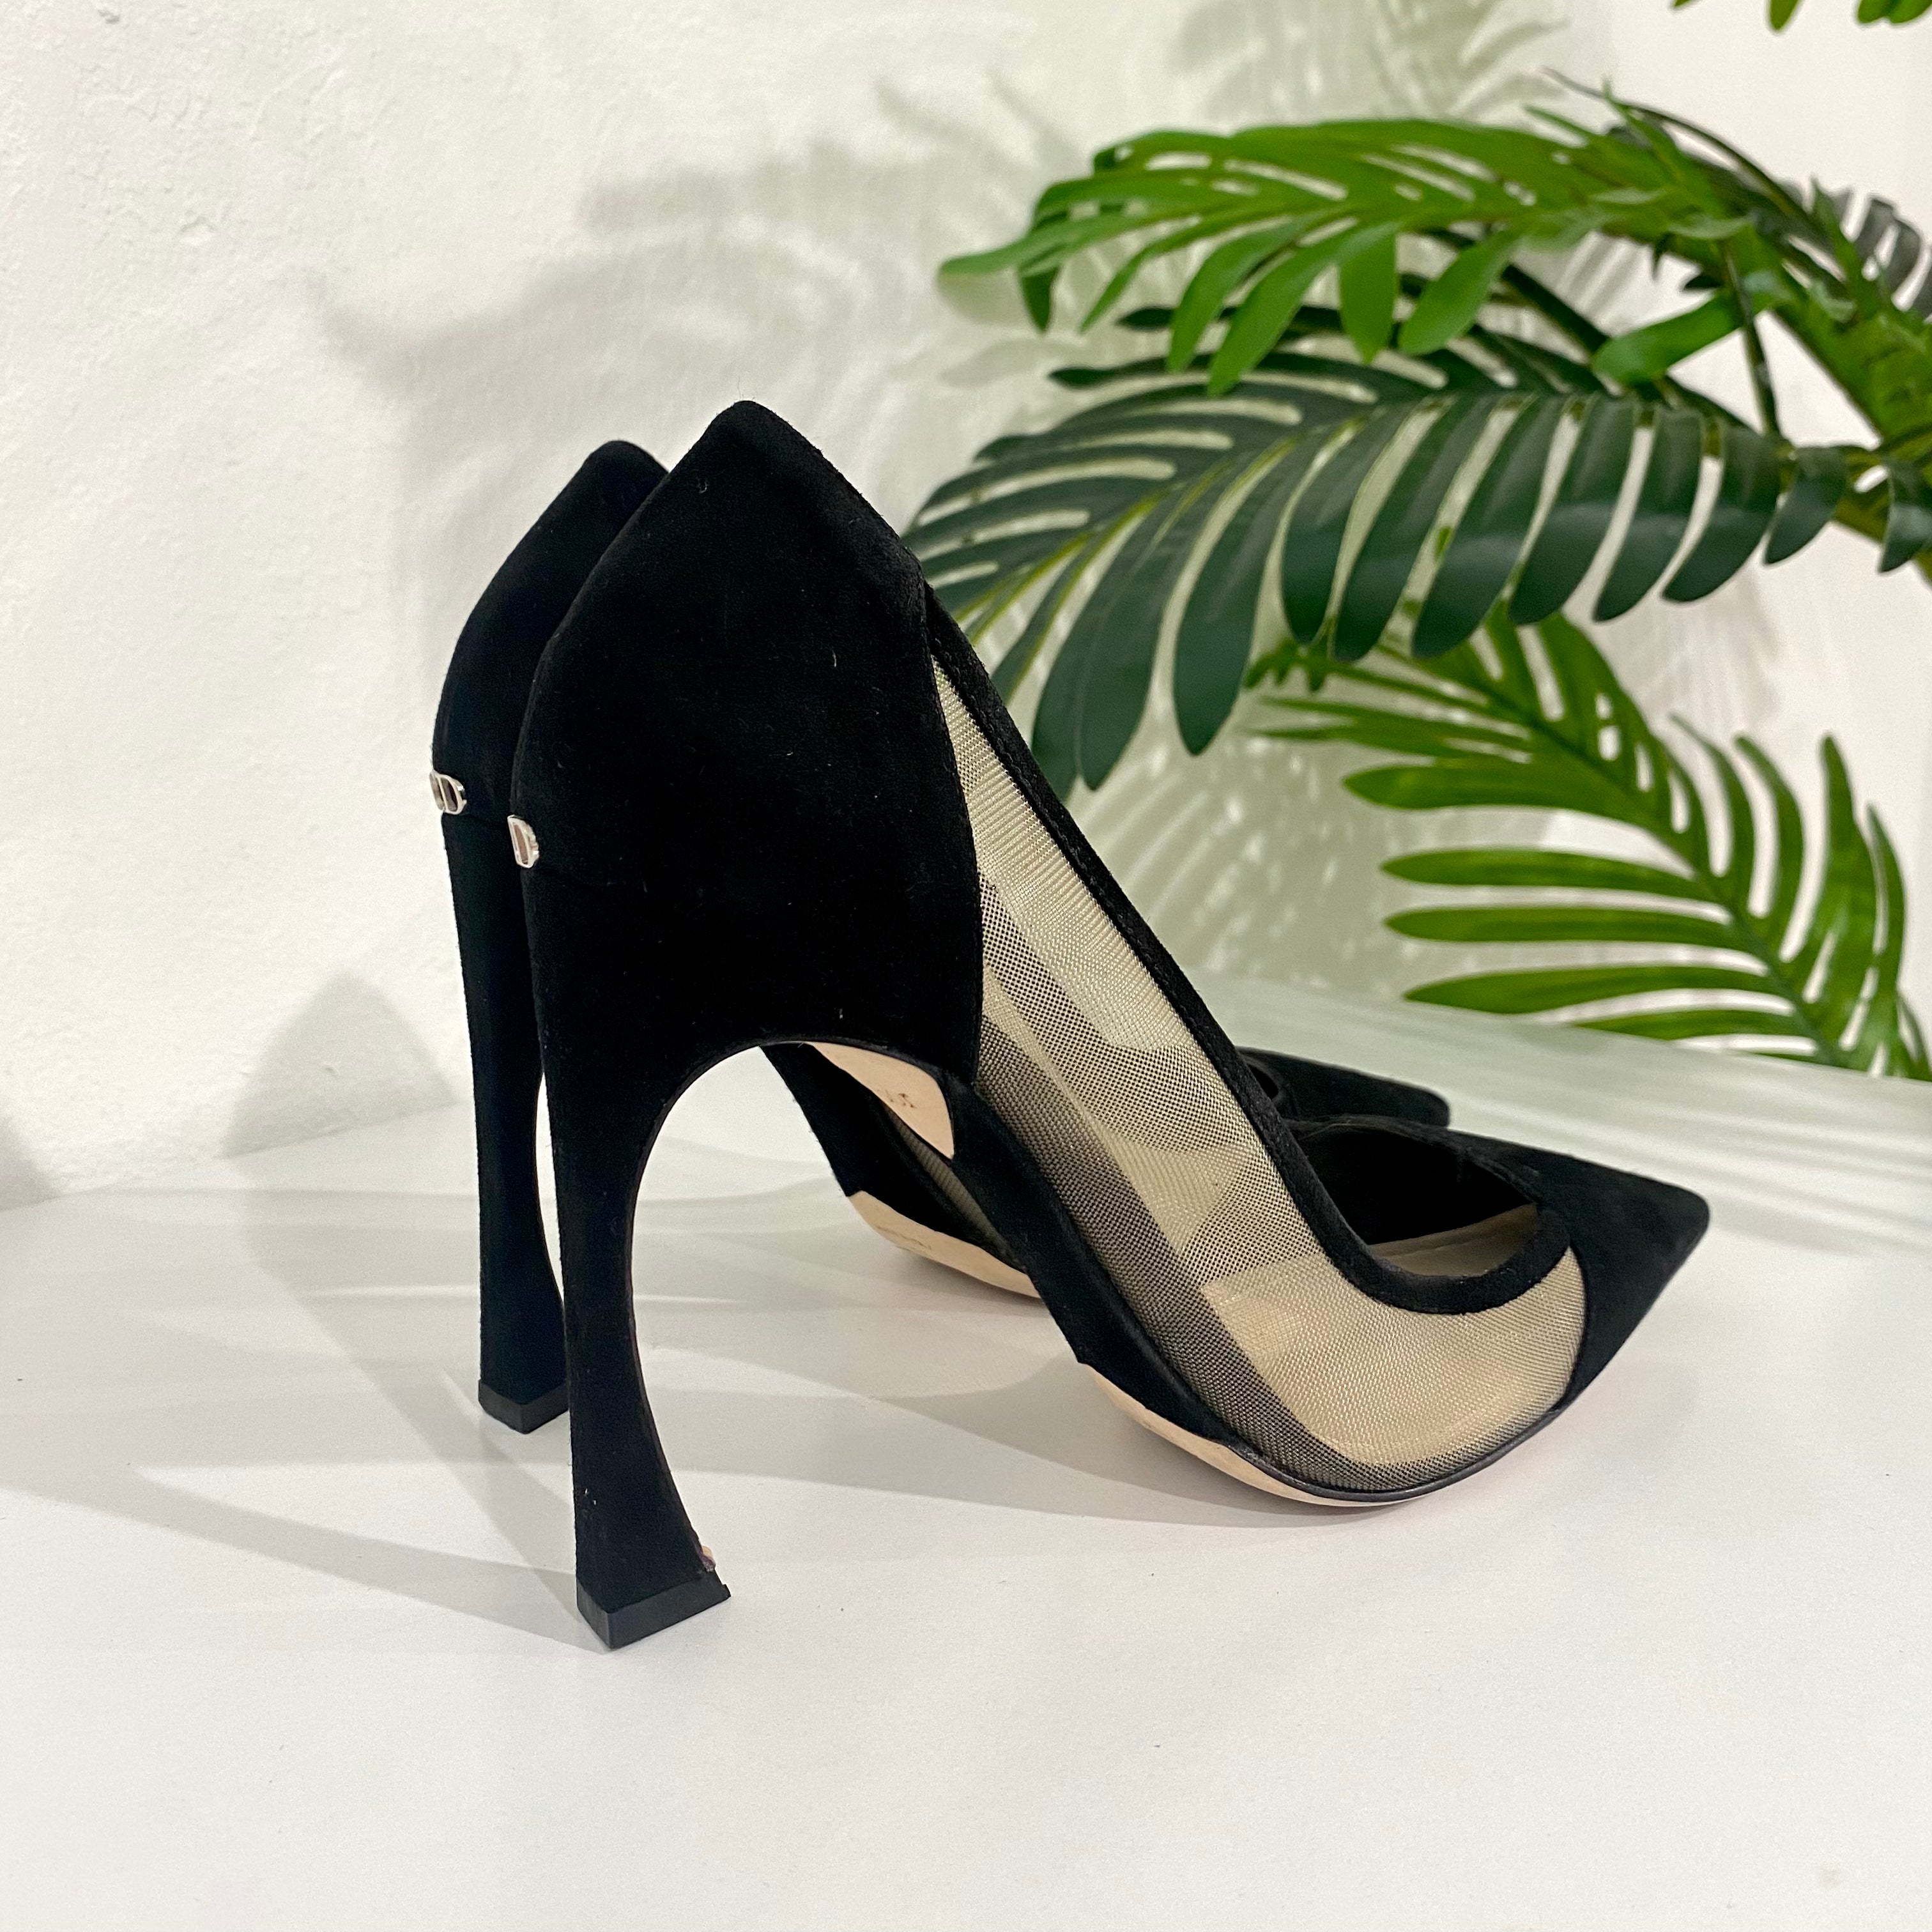 Dior Black Suede & Mesh Heels